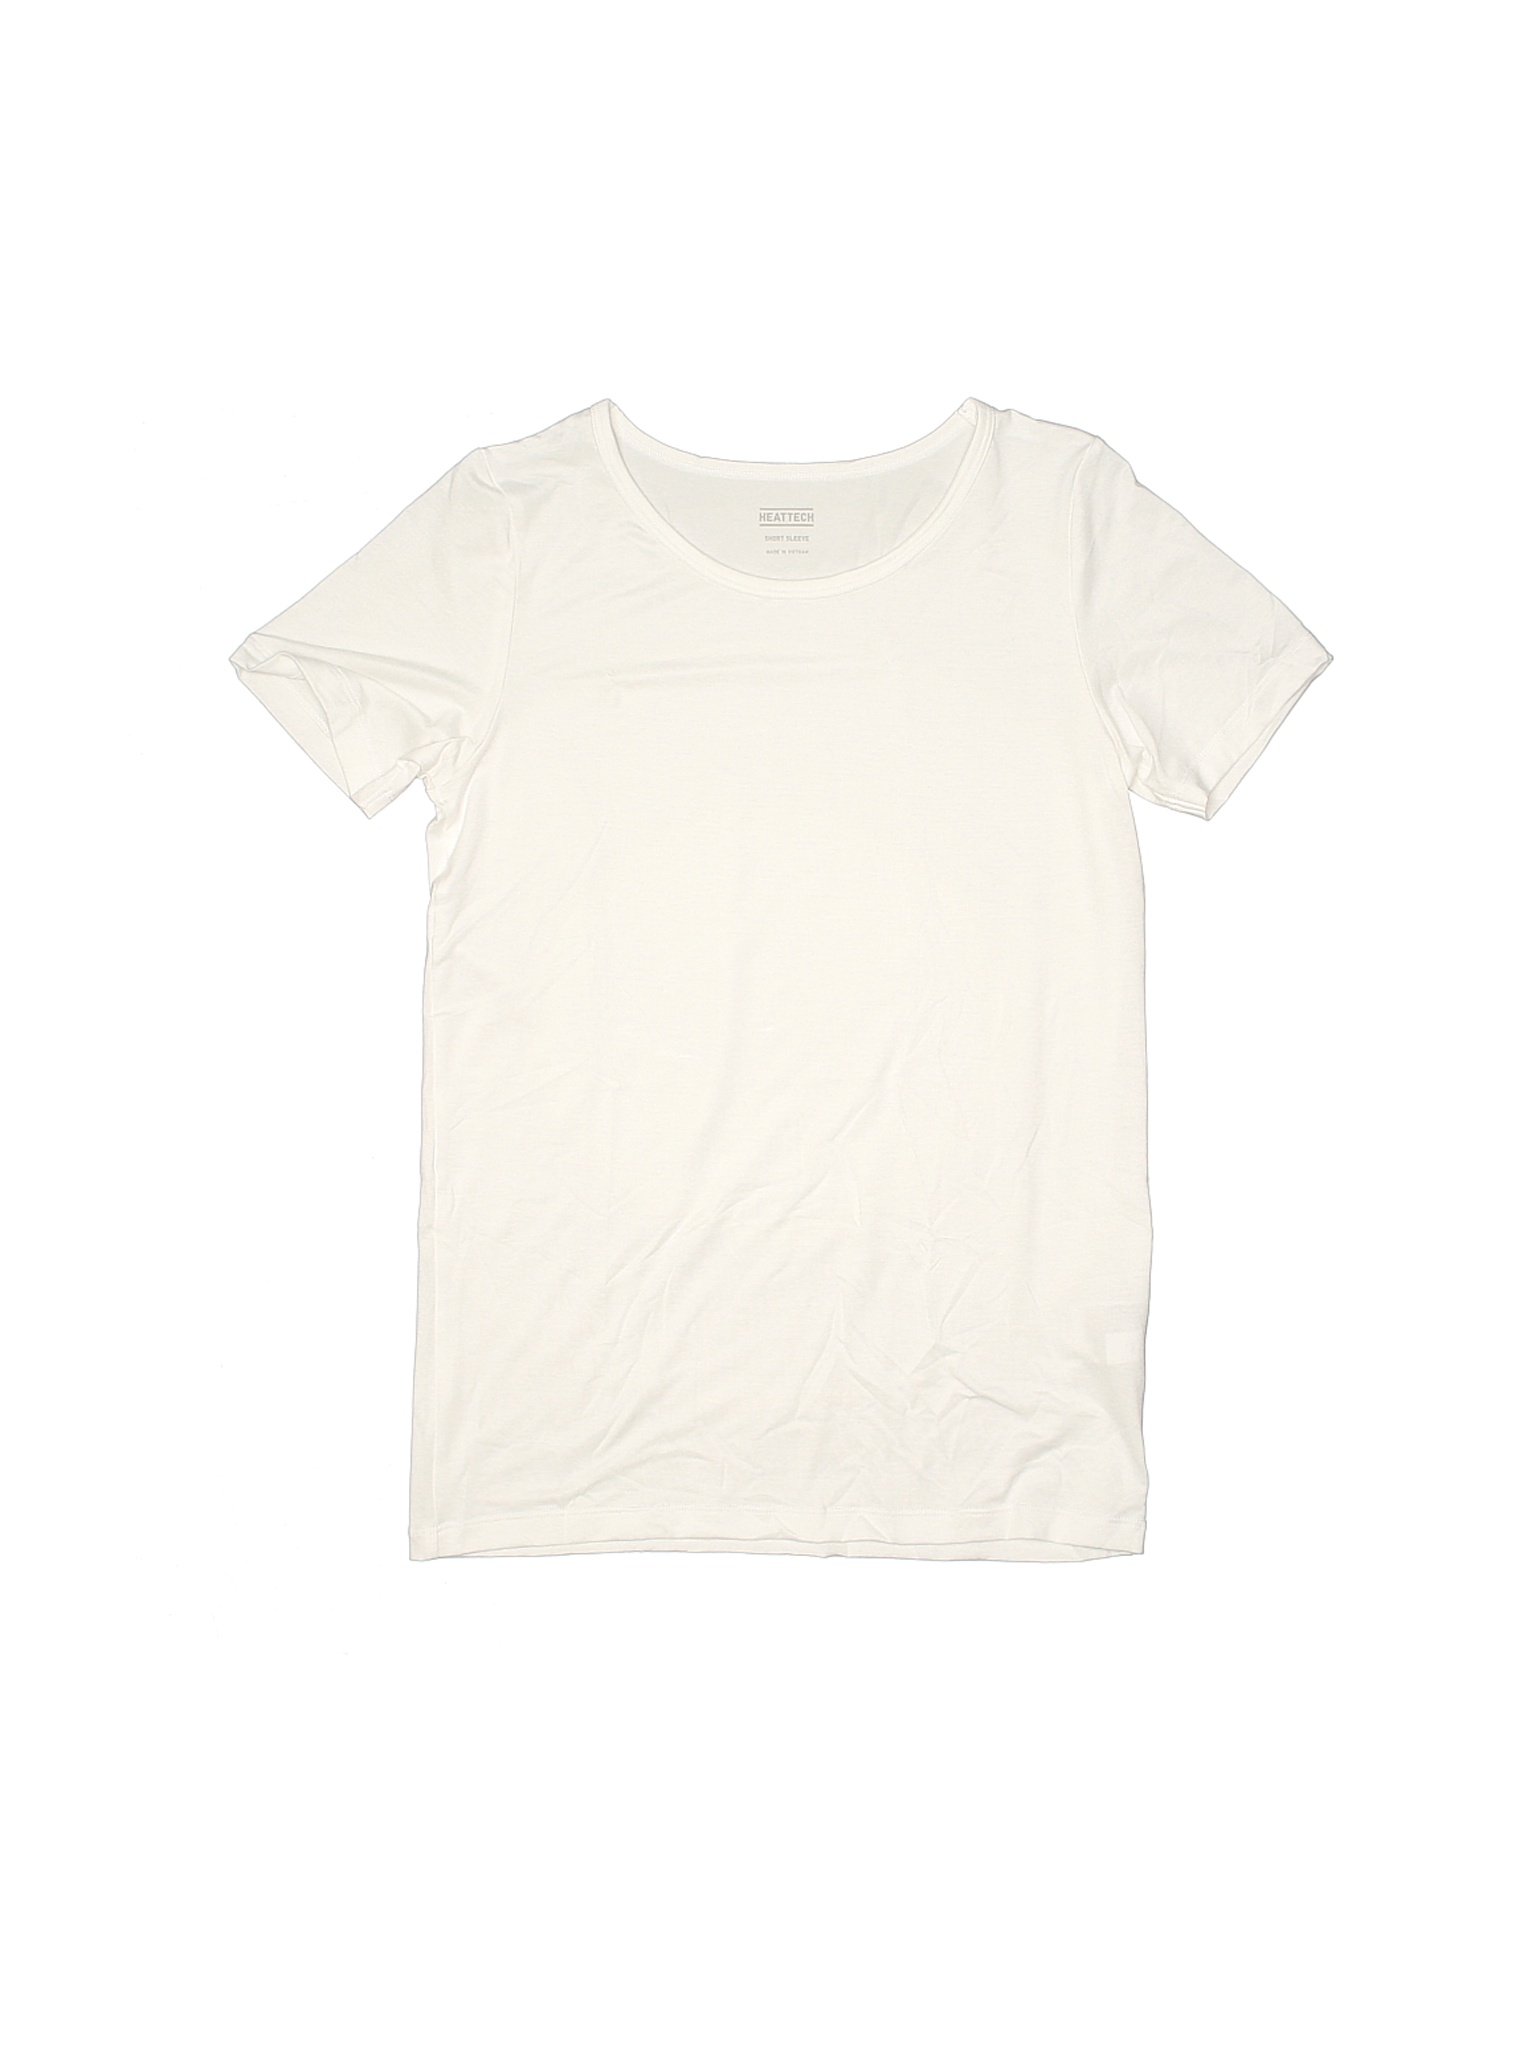 Uniqlo Girls Ivory Short Sleeve T-Shirt 11 | eBay